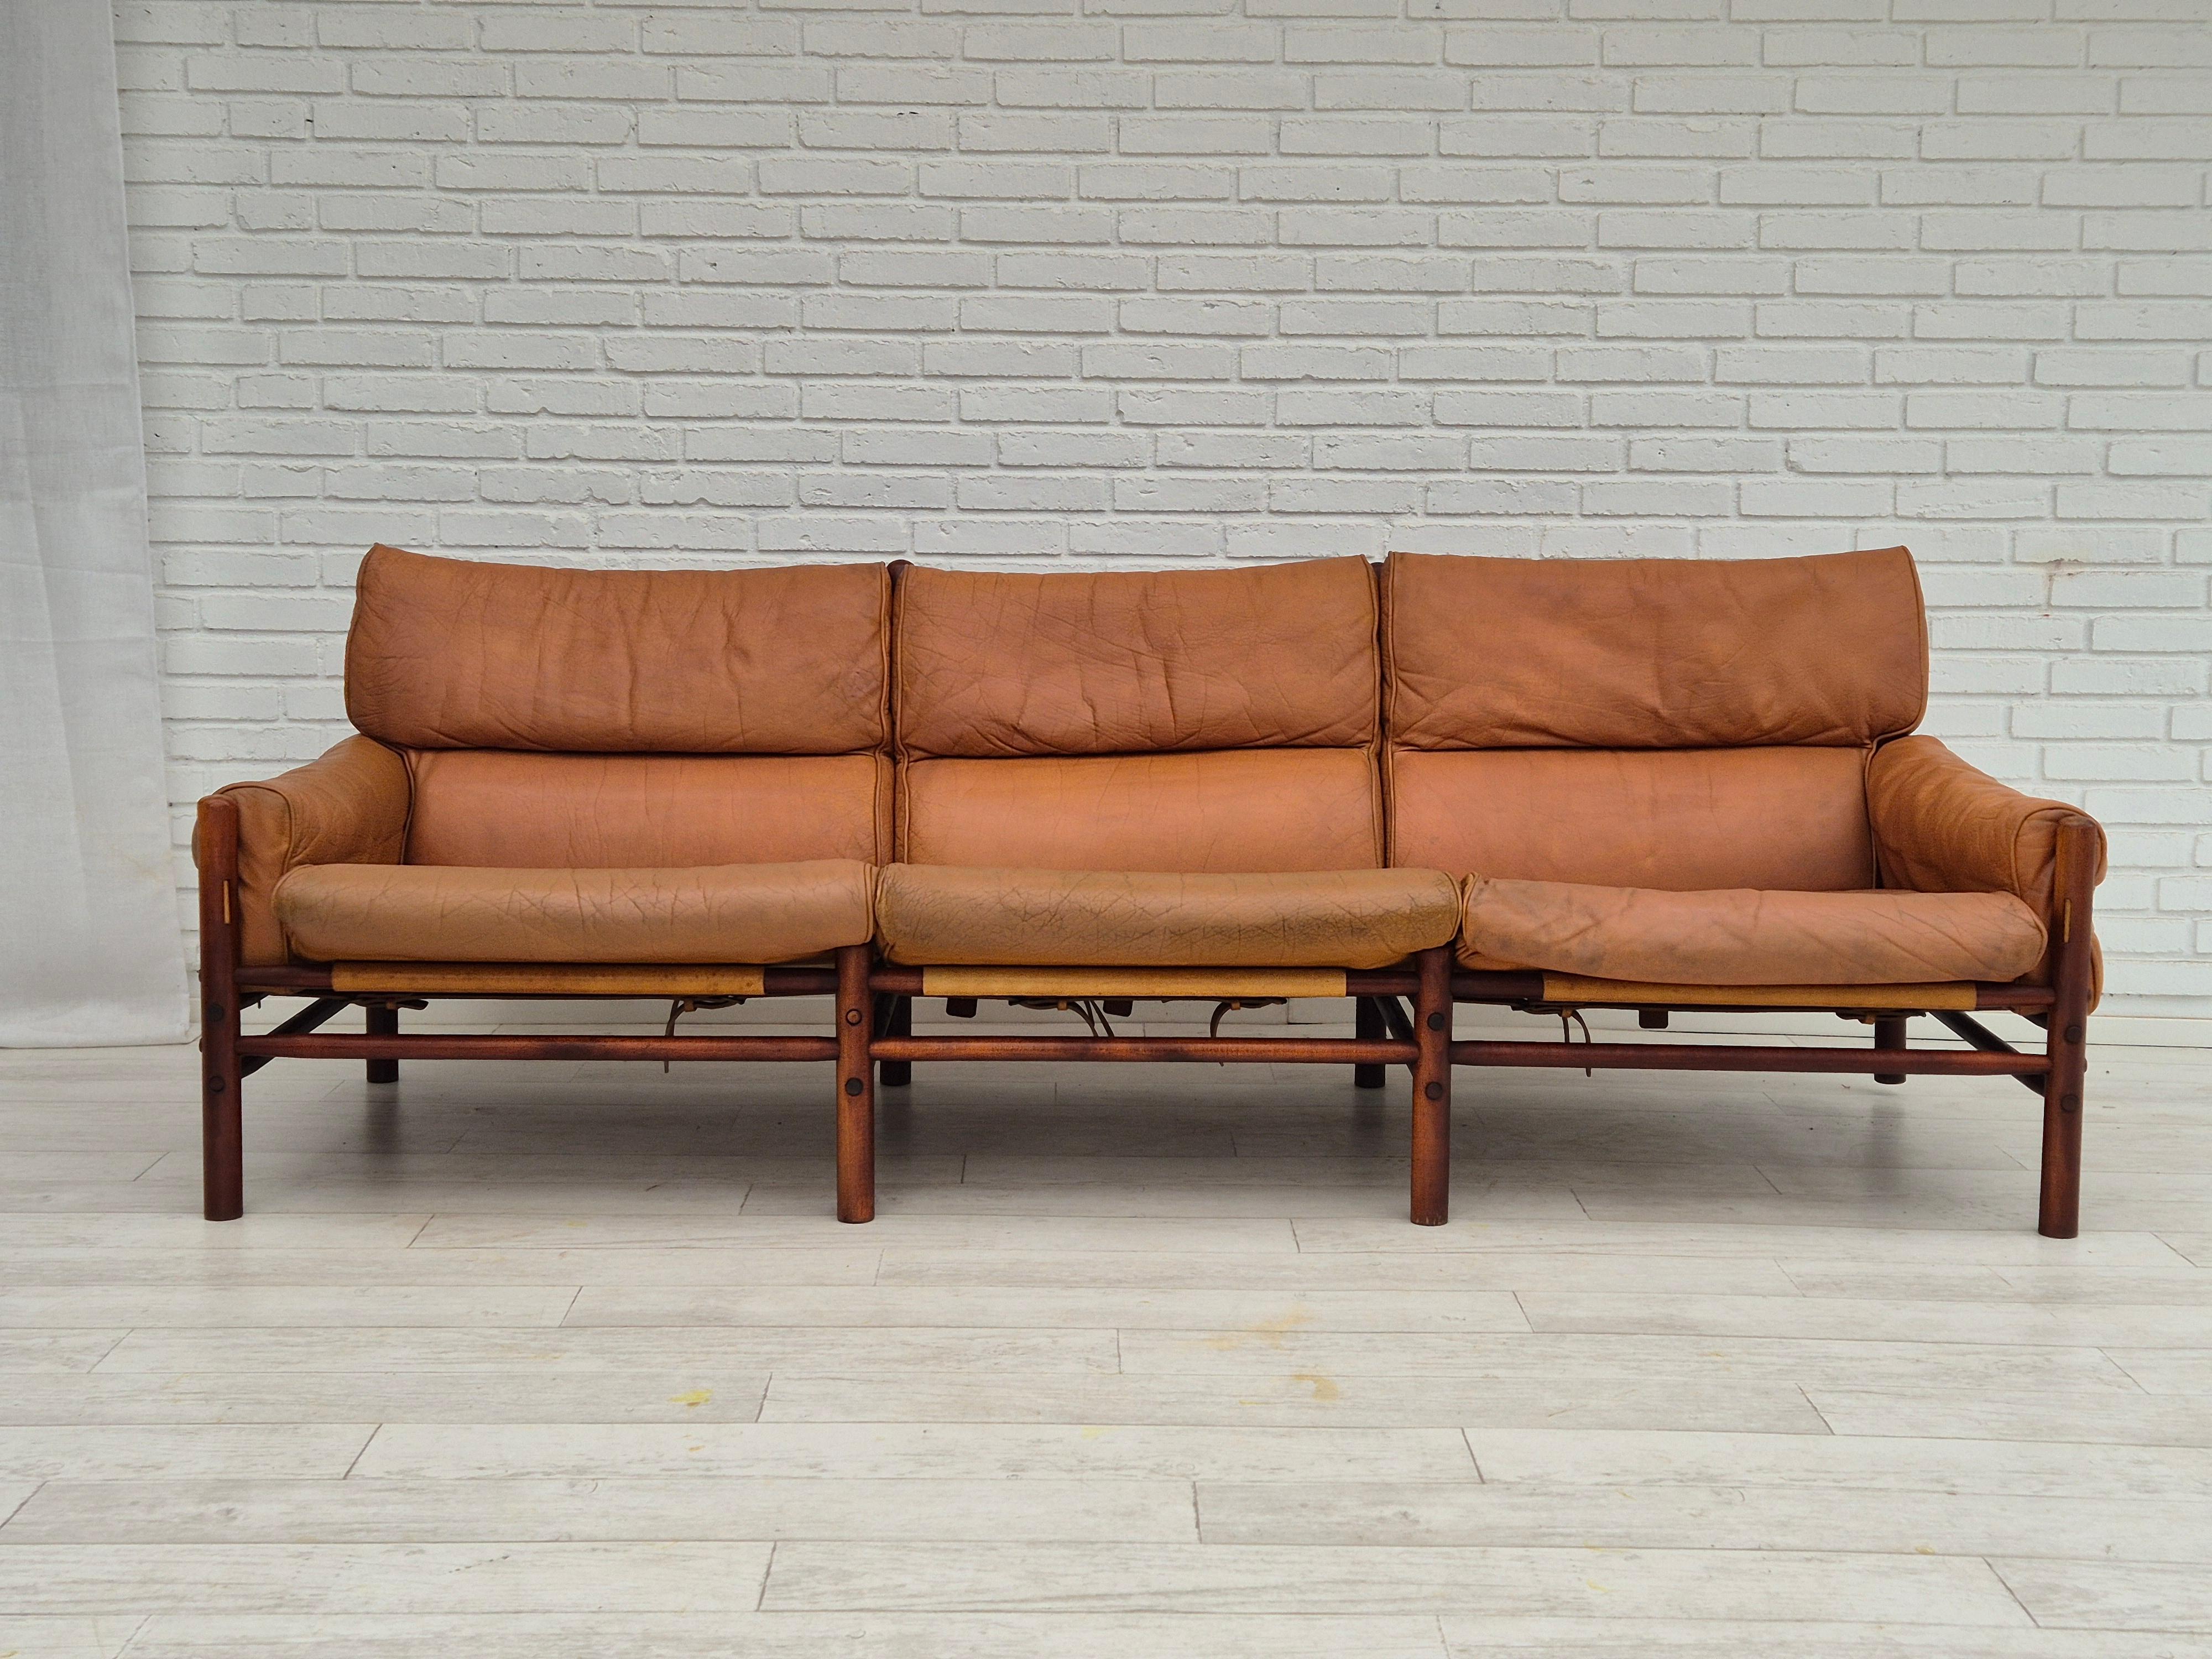 1960s, Scandinavian design by Arne Norell. 3 seater sofa, model 